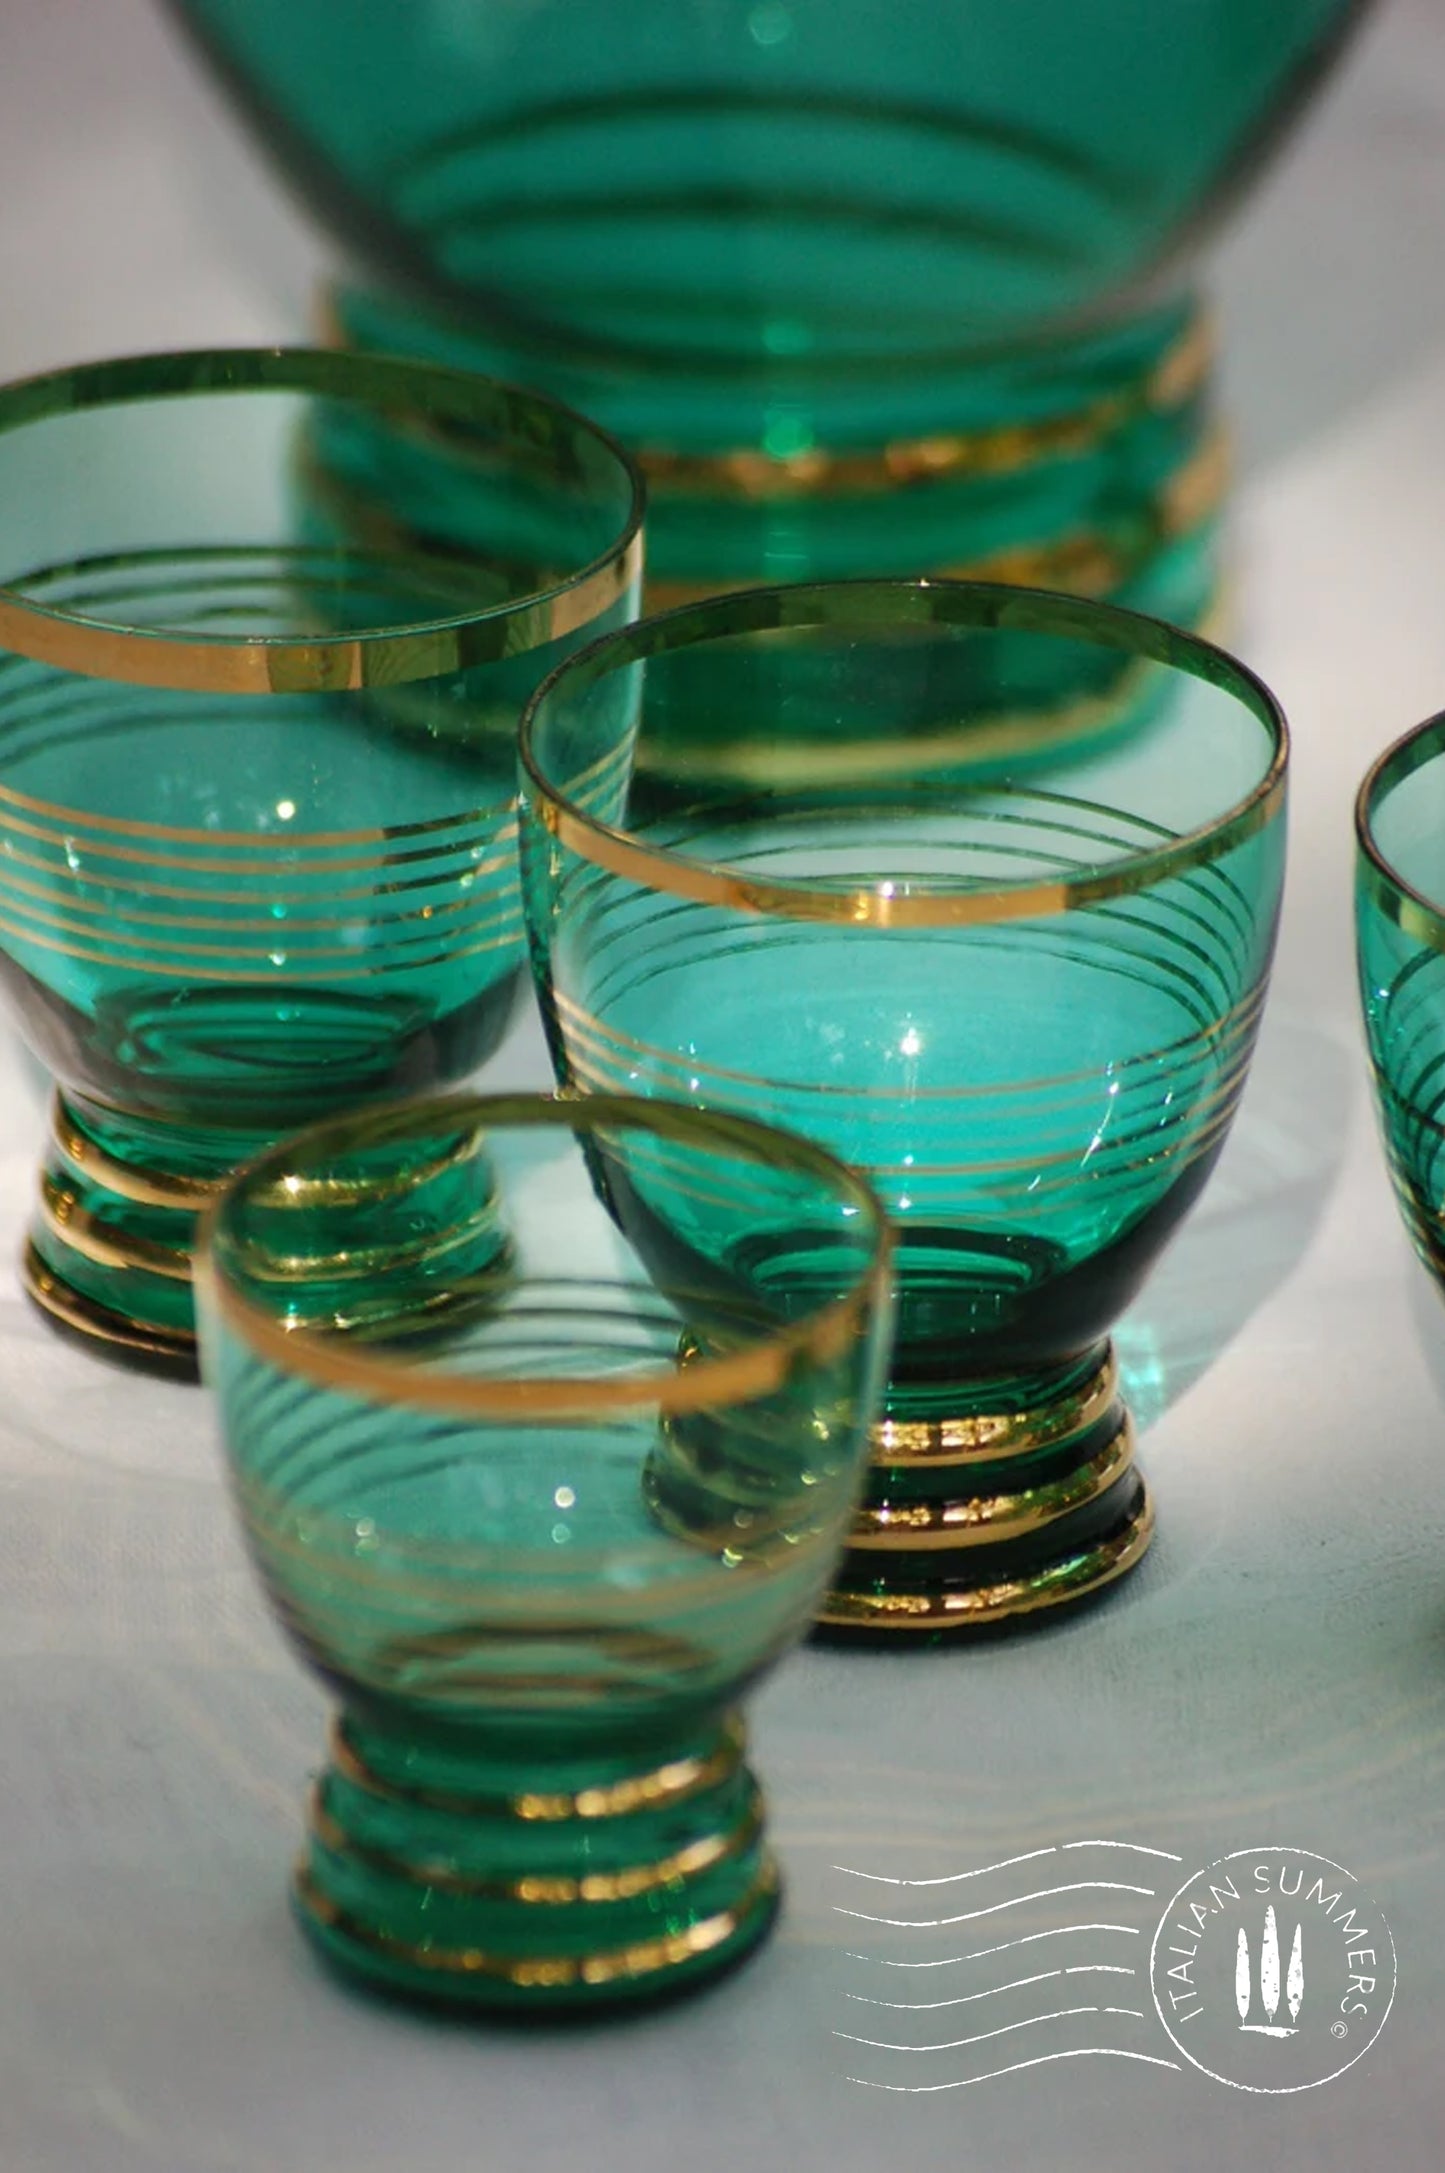 RARE Vintage liquor set from Montecarlo, Verrerie de Monaco, emerald and gold colored glass set, carafe glasses, green glass set